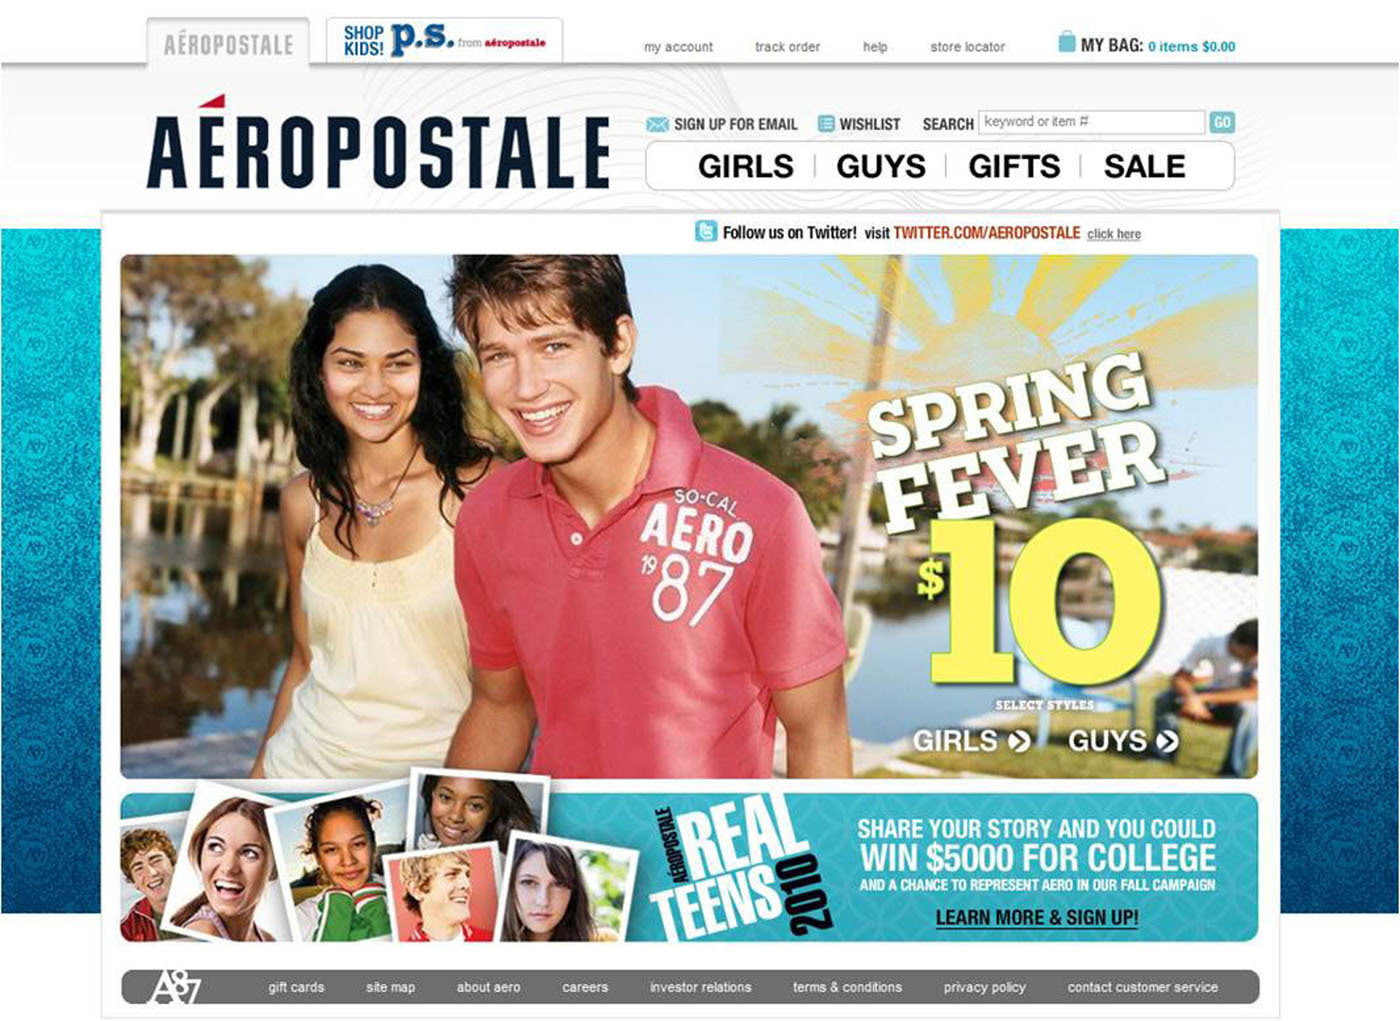 Open Casting Call for Aeropostale Fall 2010 Ad Campaign